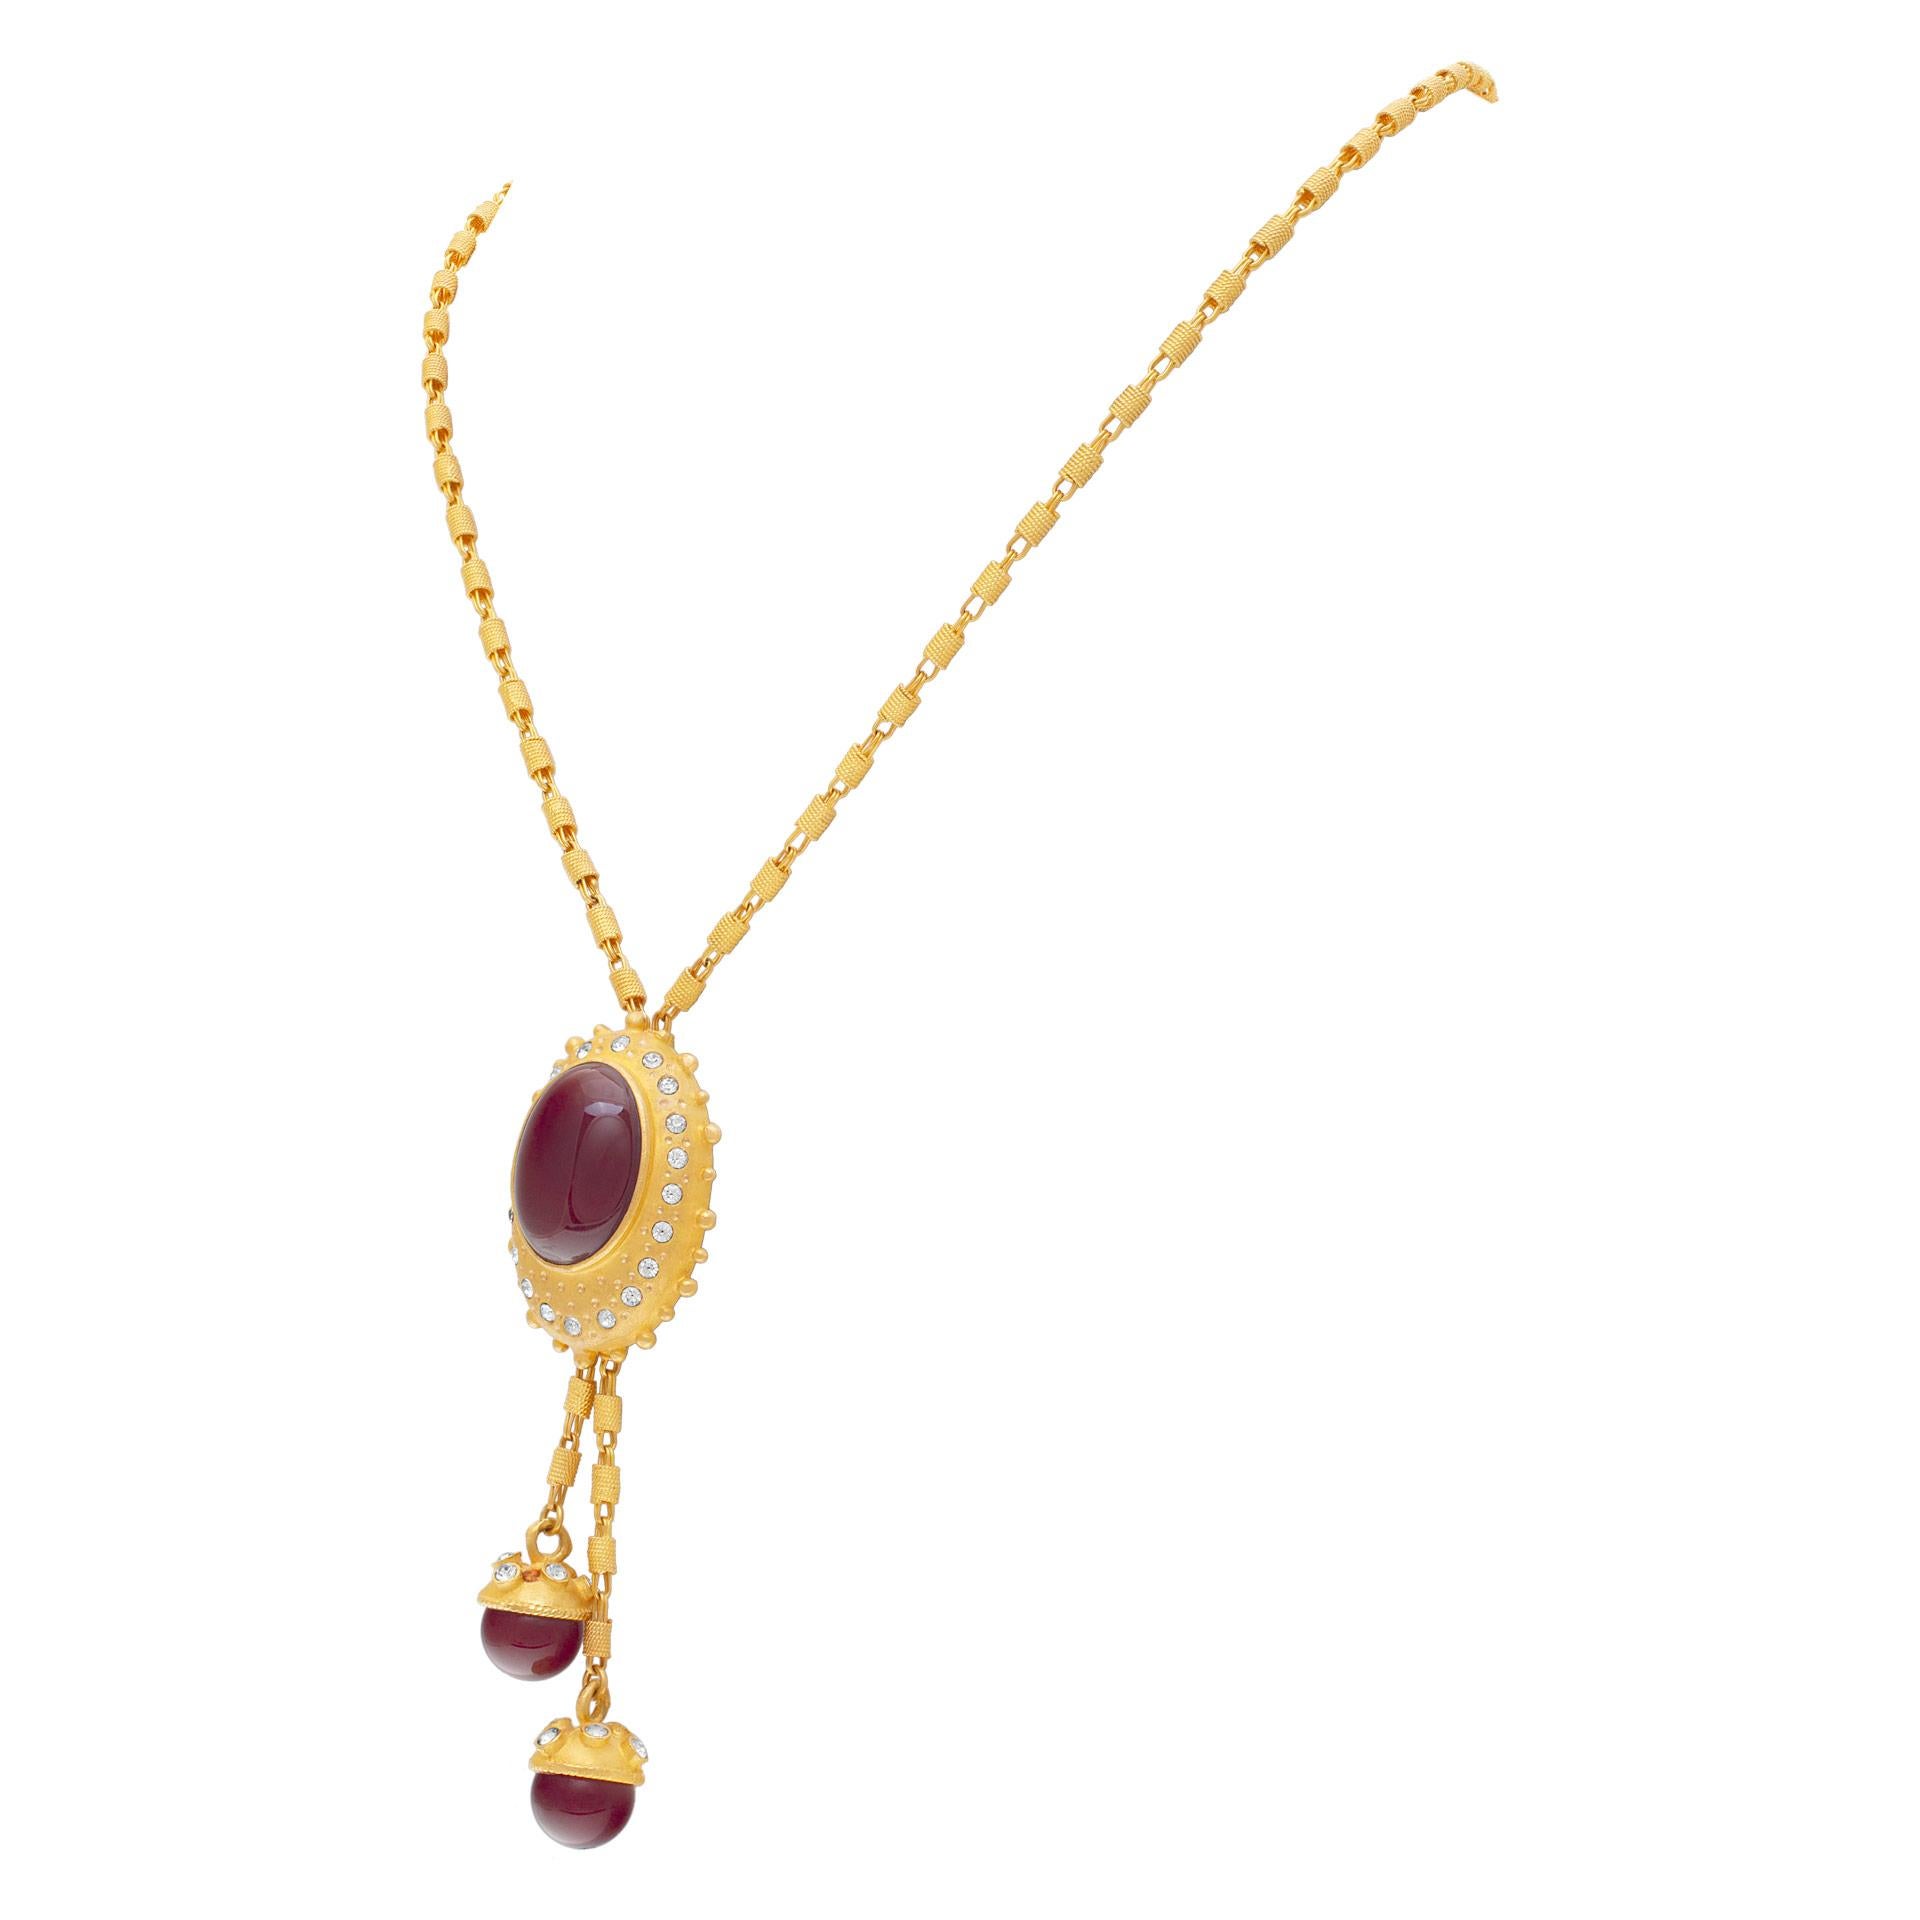 Modern Necklace and Earrings Set in 18k with Carnelian & Diamonds